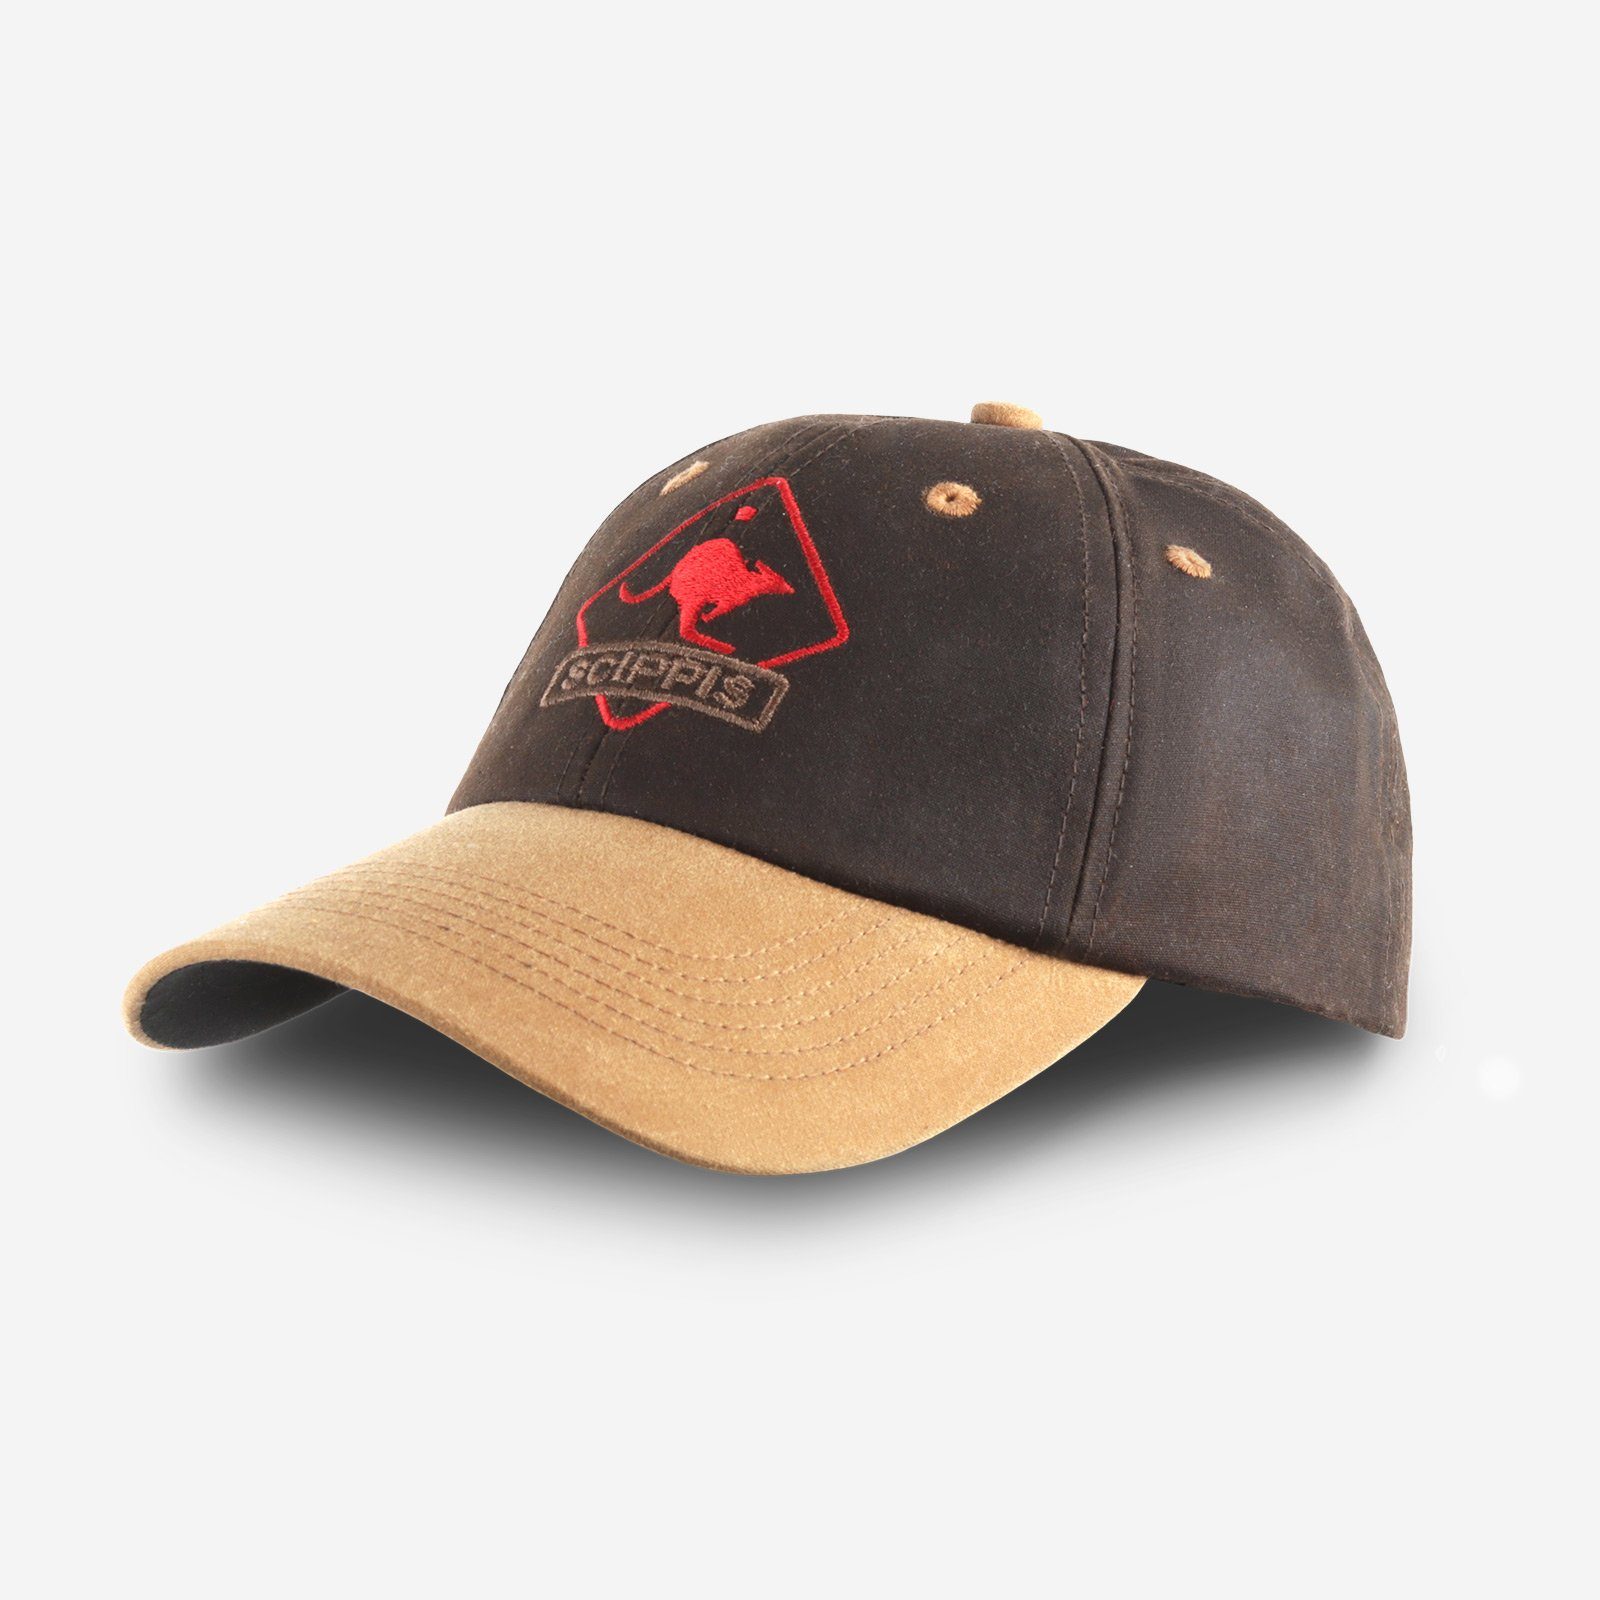 Extrem Cap atmungsaktiv Baseball wasserabweisend, tan/brown CAP windundurchlässig OILSKIN Scippis